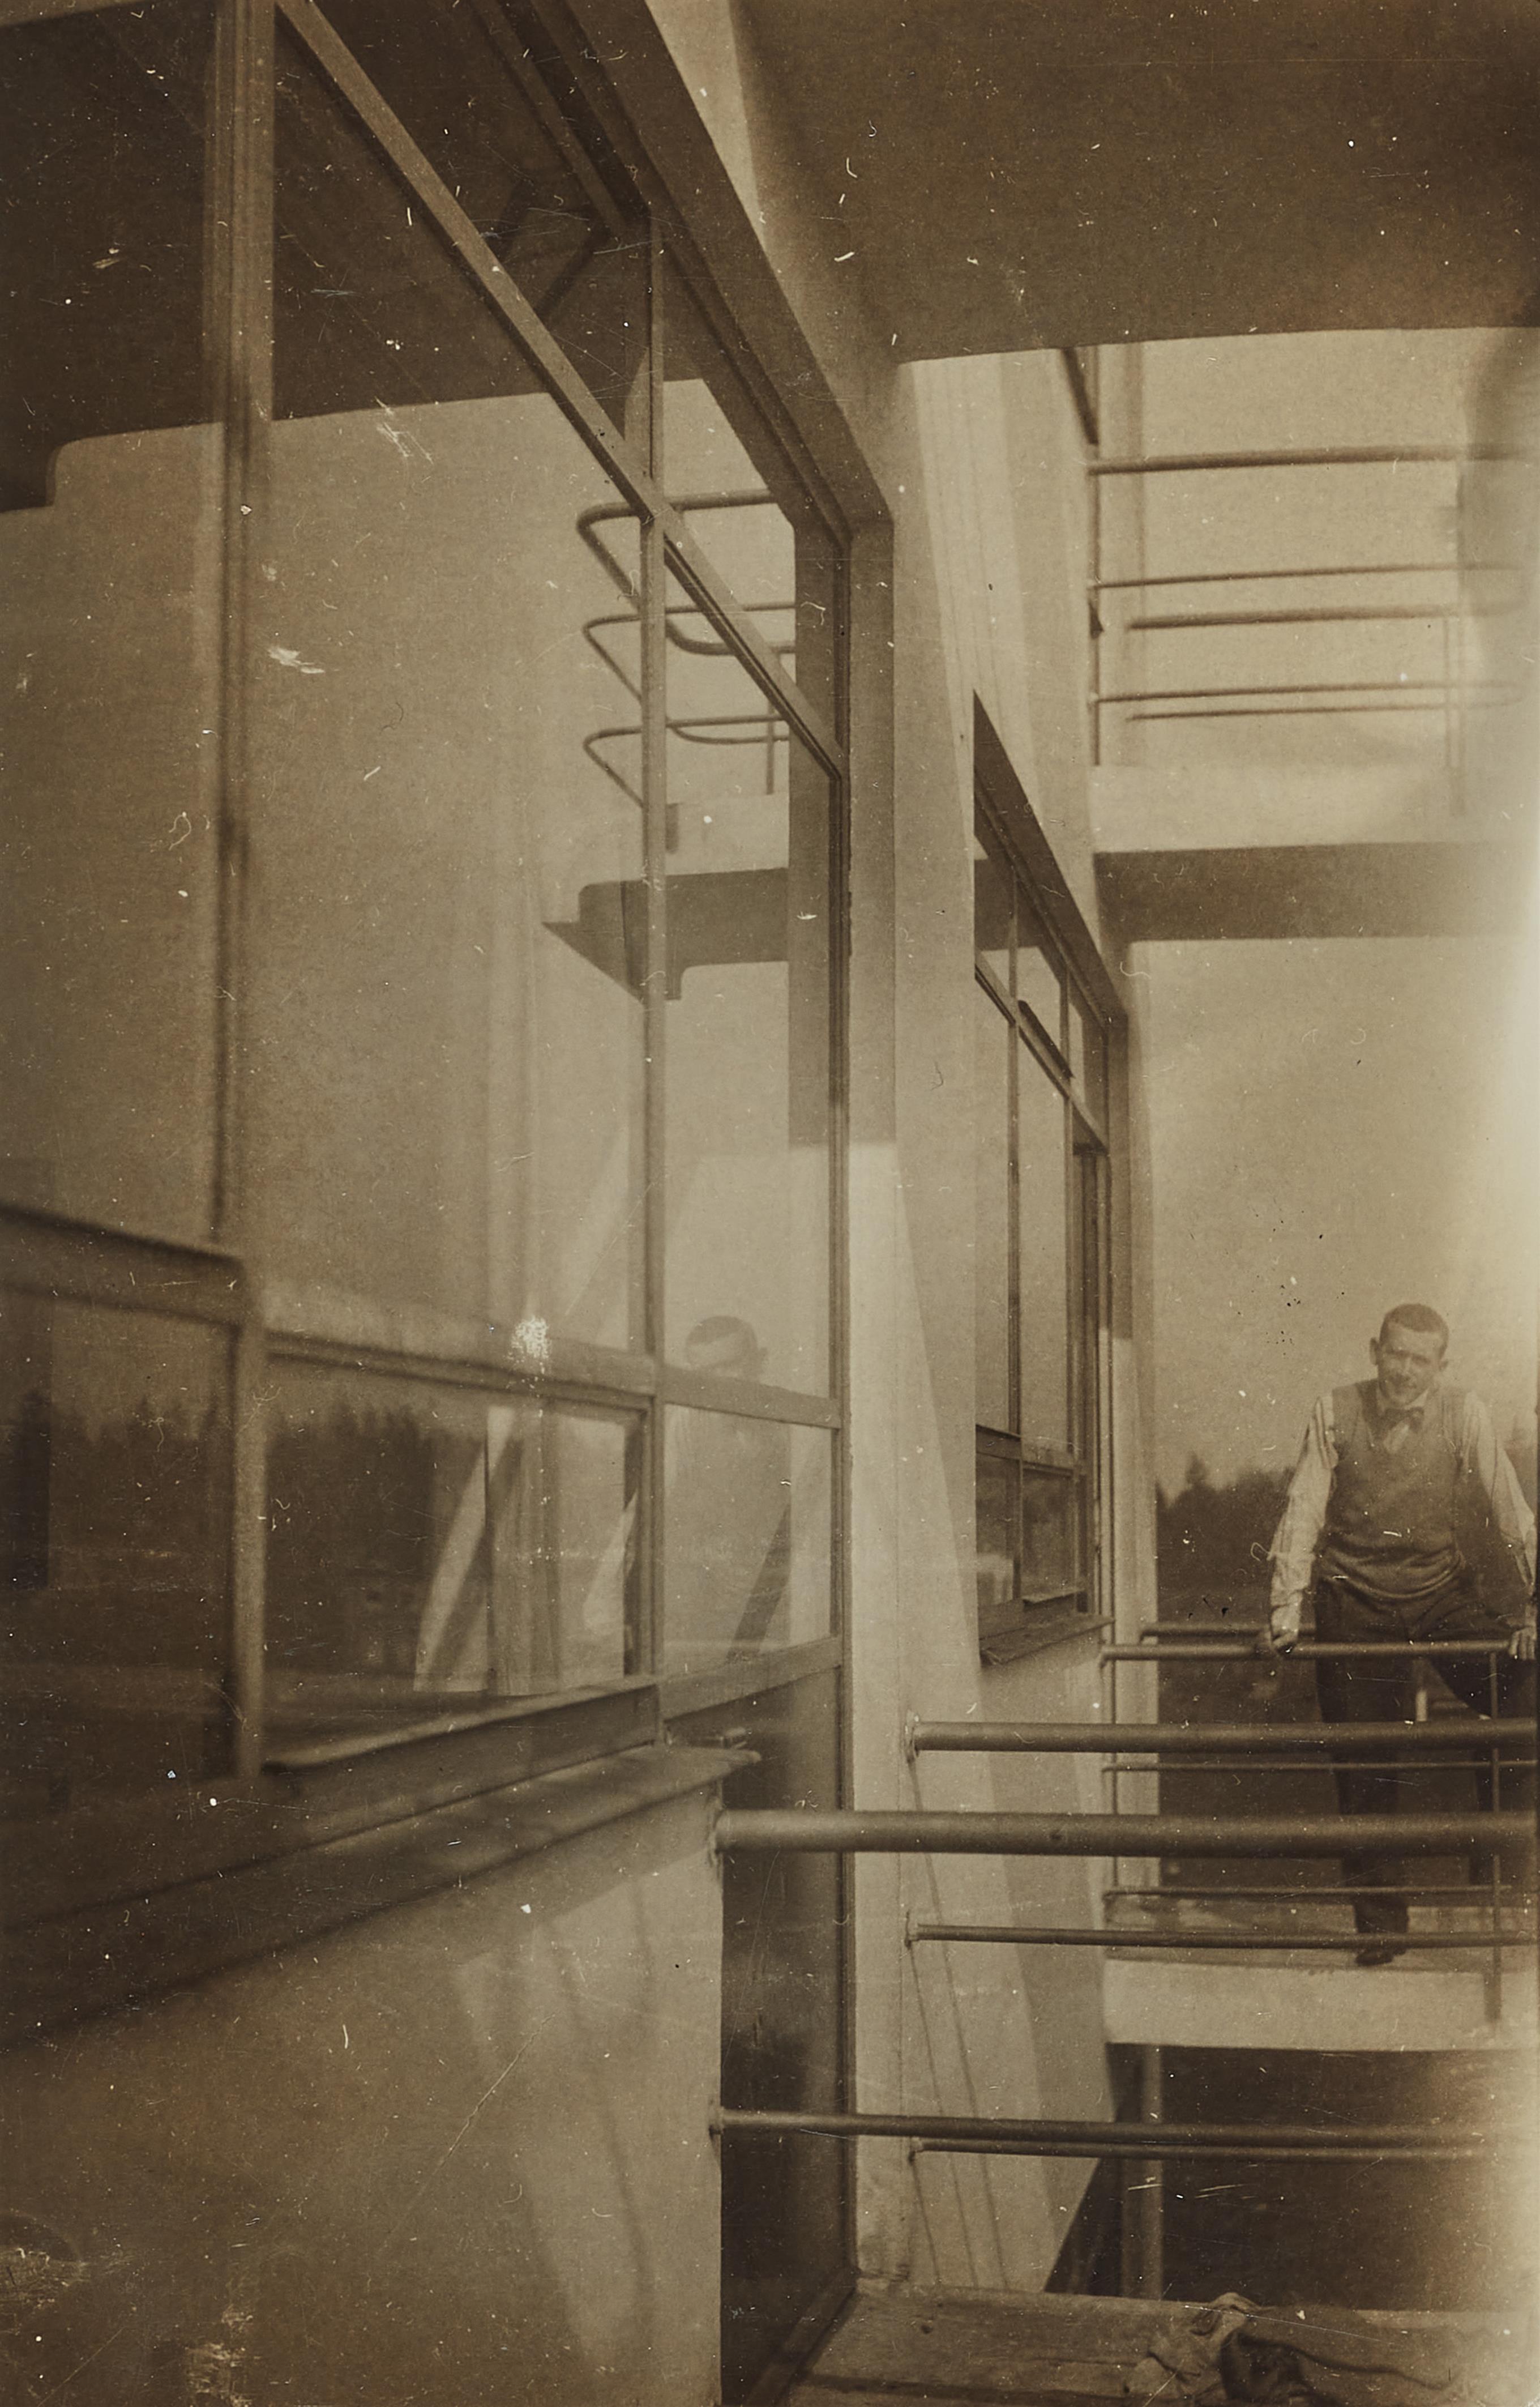 Bauhaus photography - Untitled (Marcel Breuer on his balcony, Prellerhaus, Bauhaus Dessau) - image-1